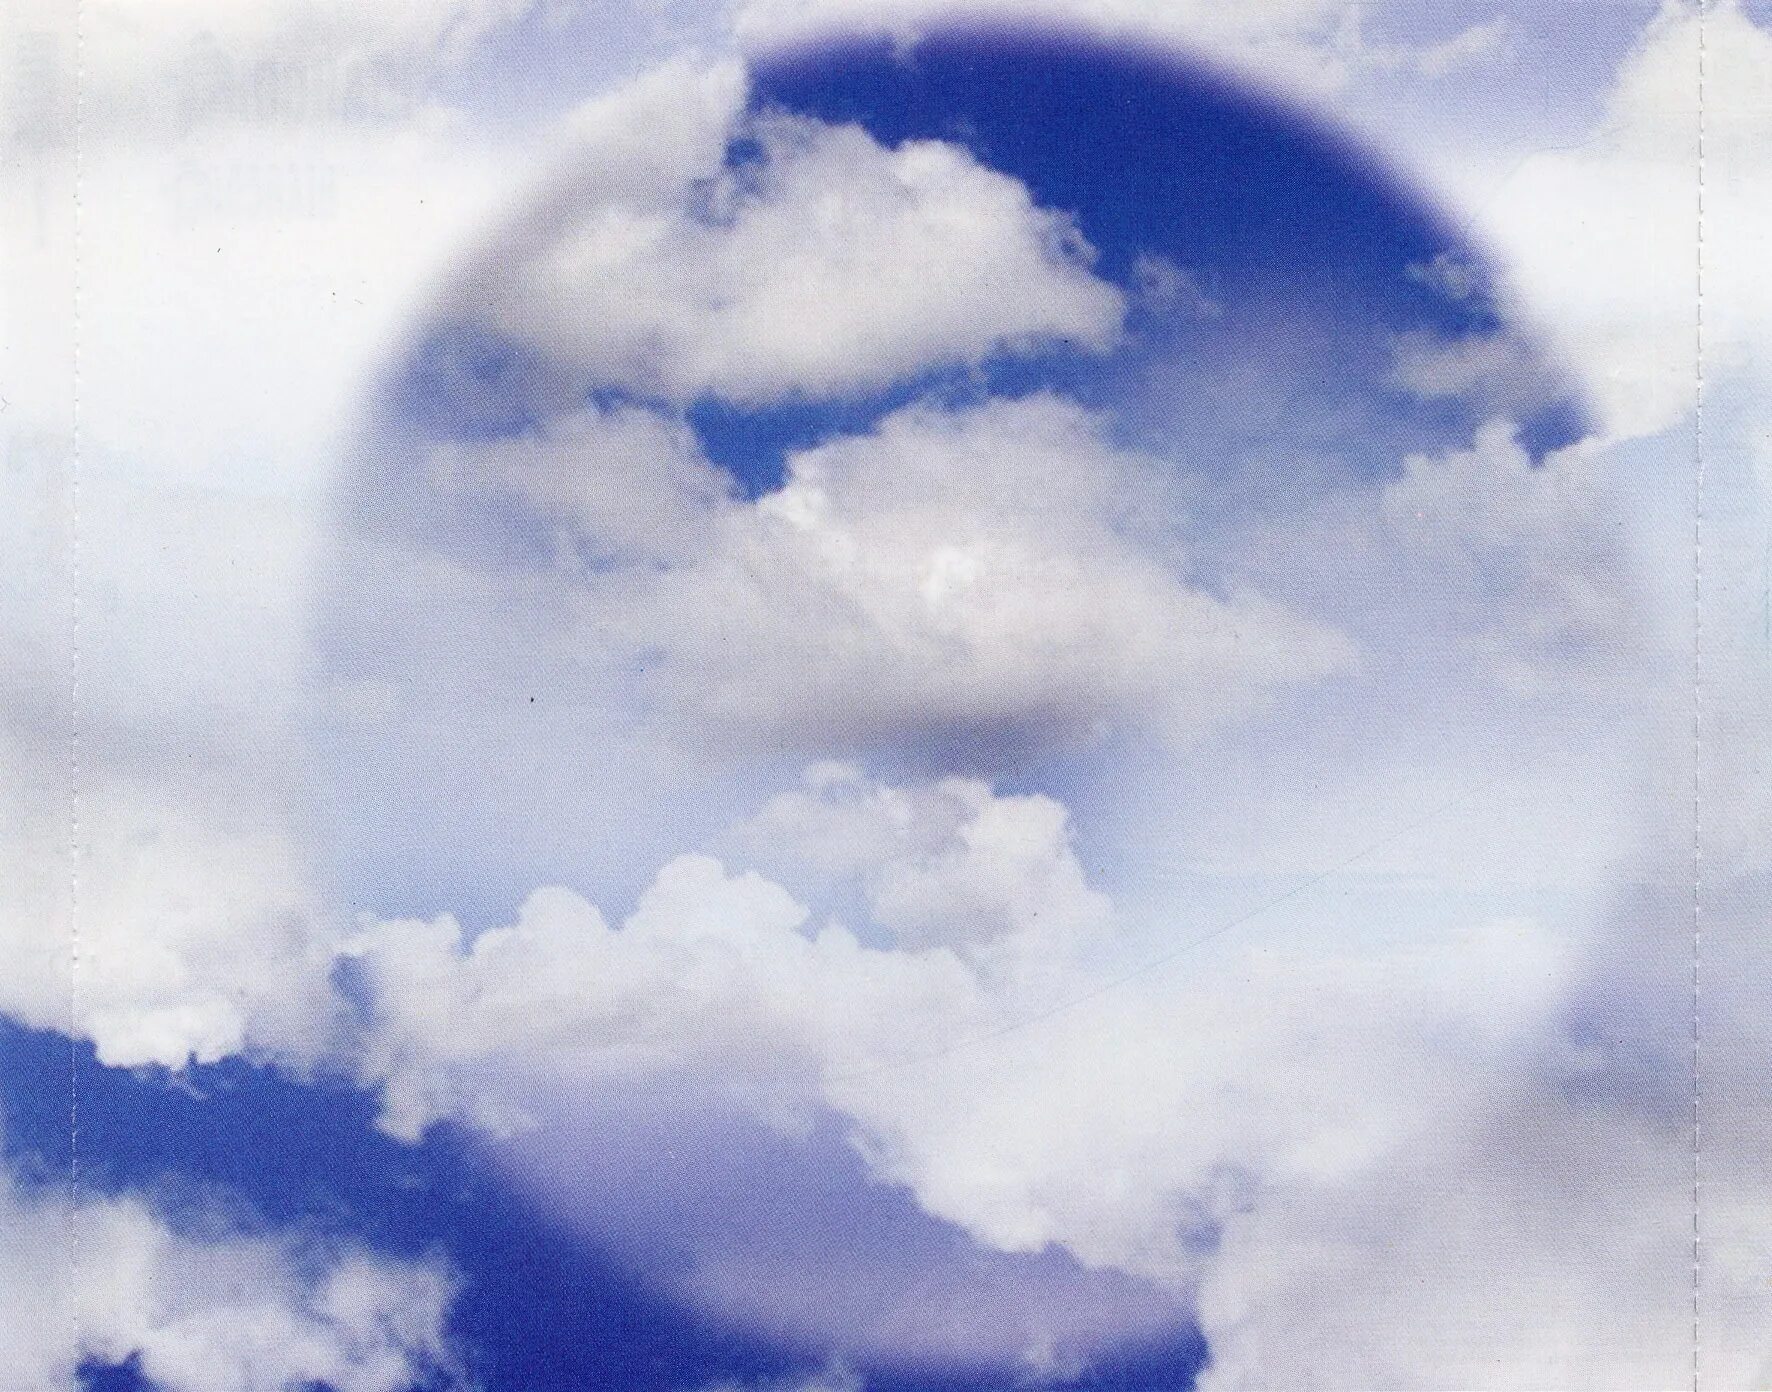 Облако самсунг. H2s облака. Игра на самсунг с облаками. Samsung cloud фото. 1 июля 2008 г